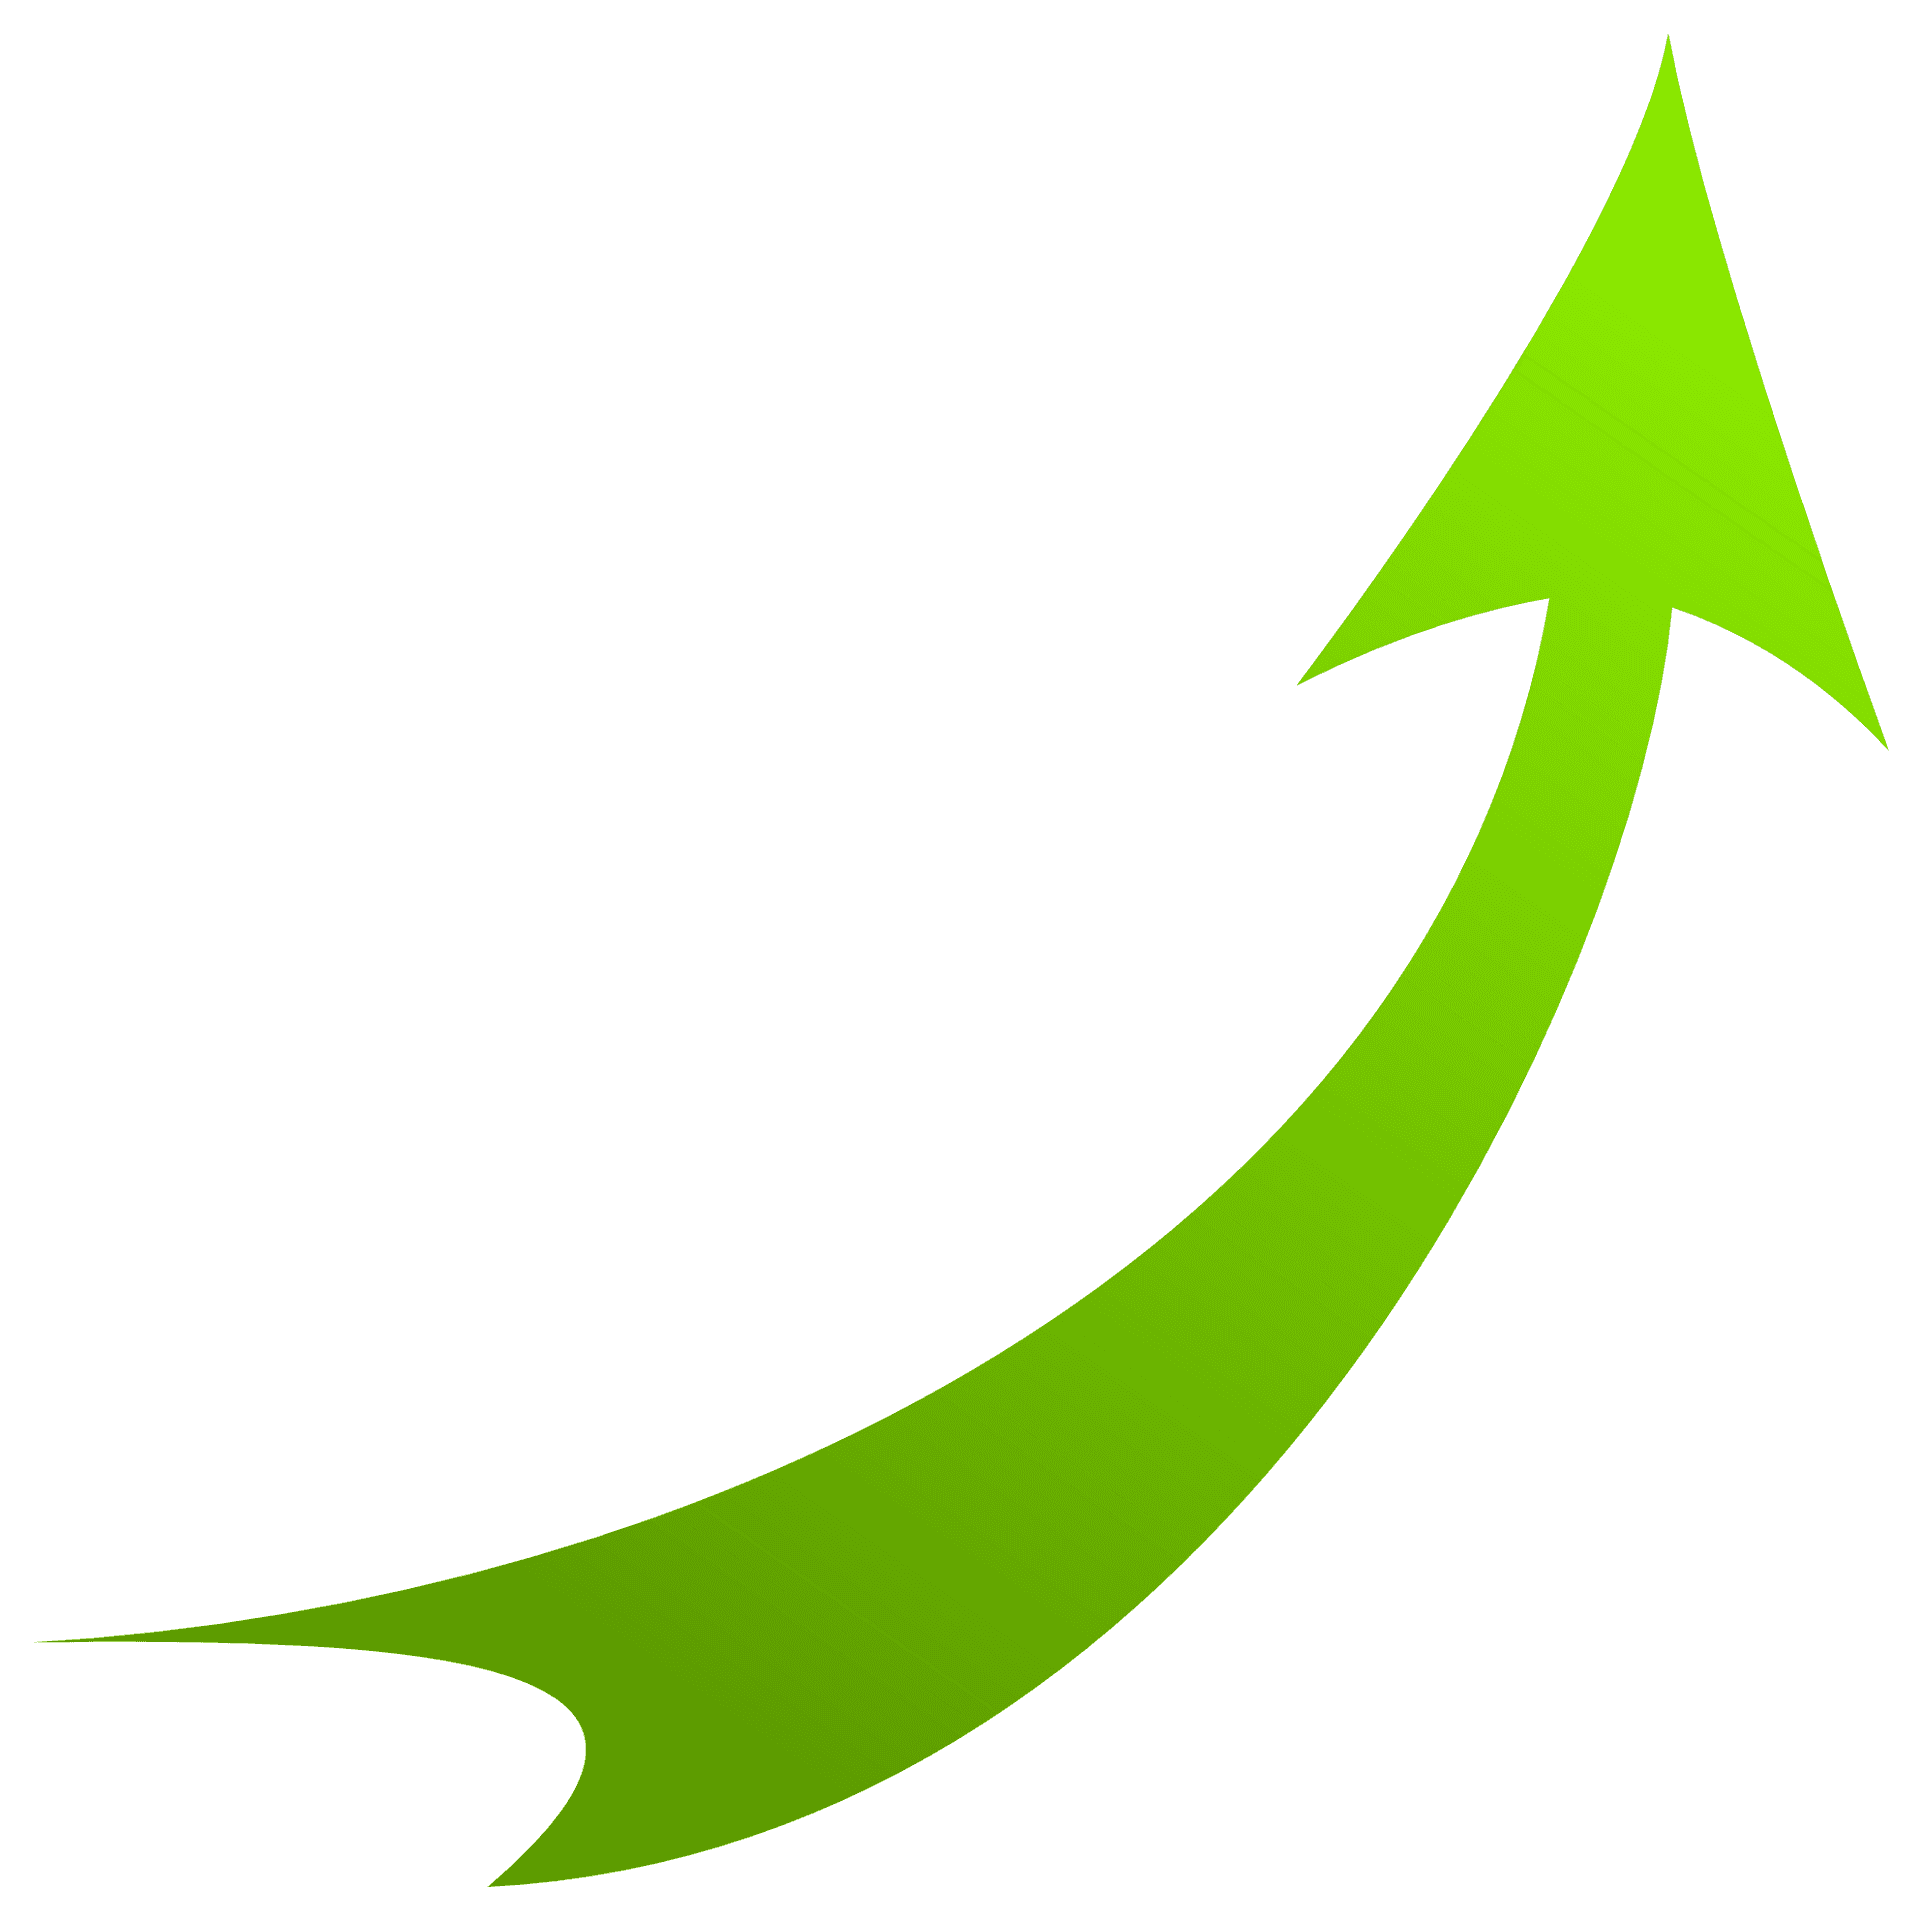 Green Upward Arrow Graphic PNG image